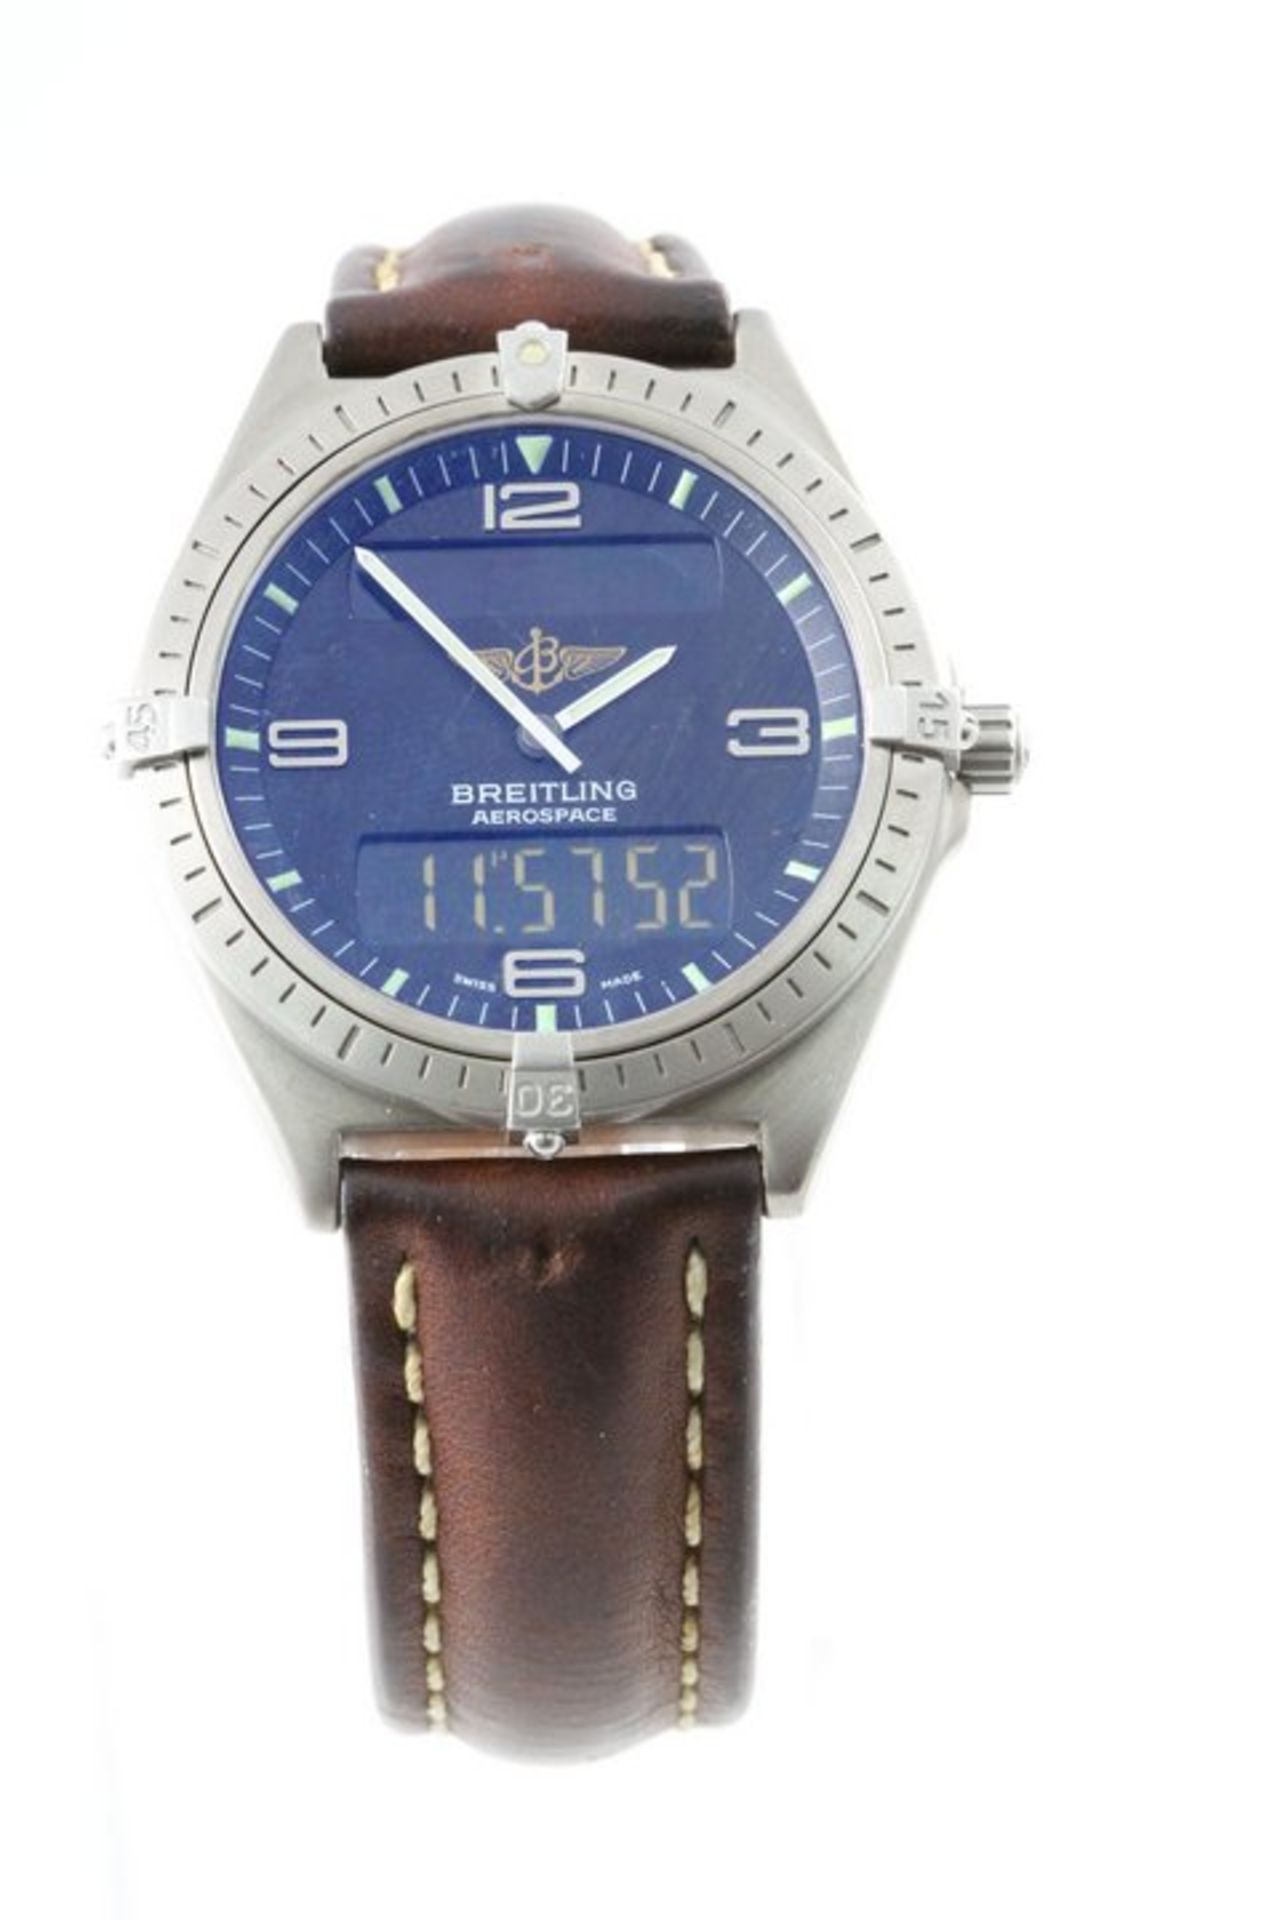 Breitling Aerospace Gents Titanium Watch - Image 5 of 8